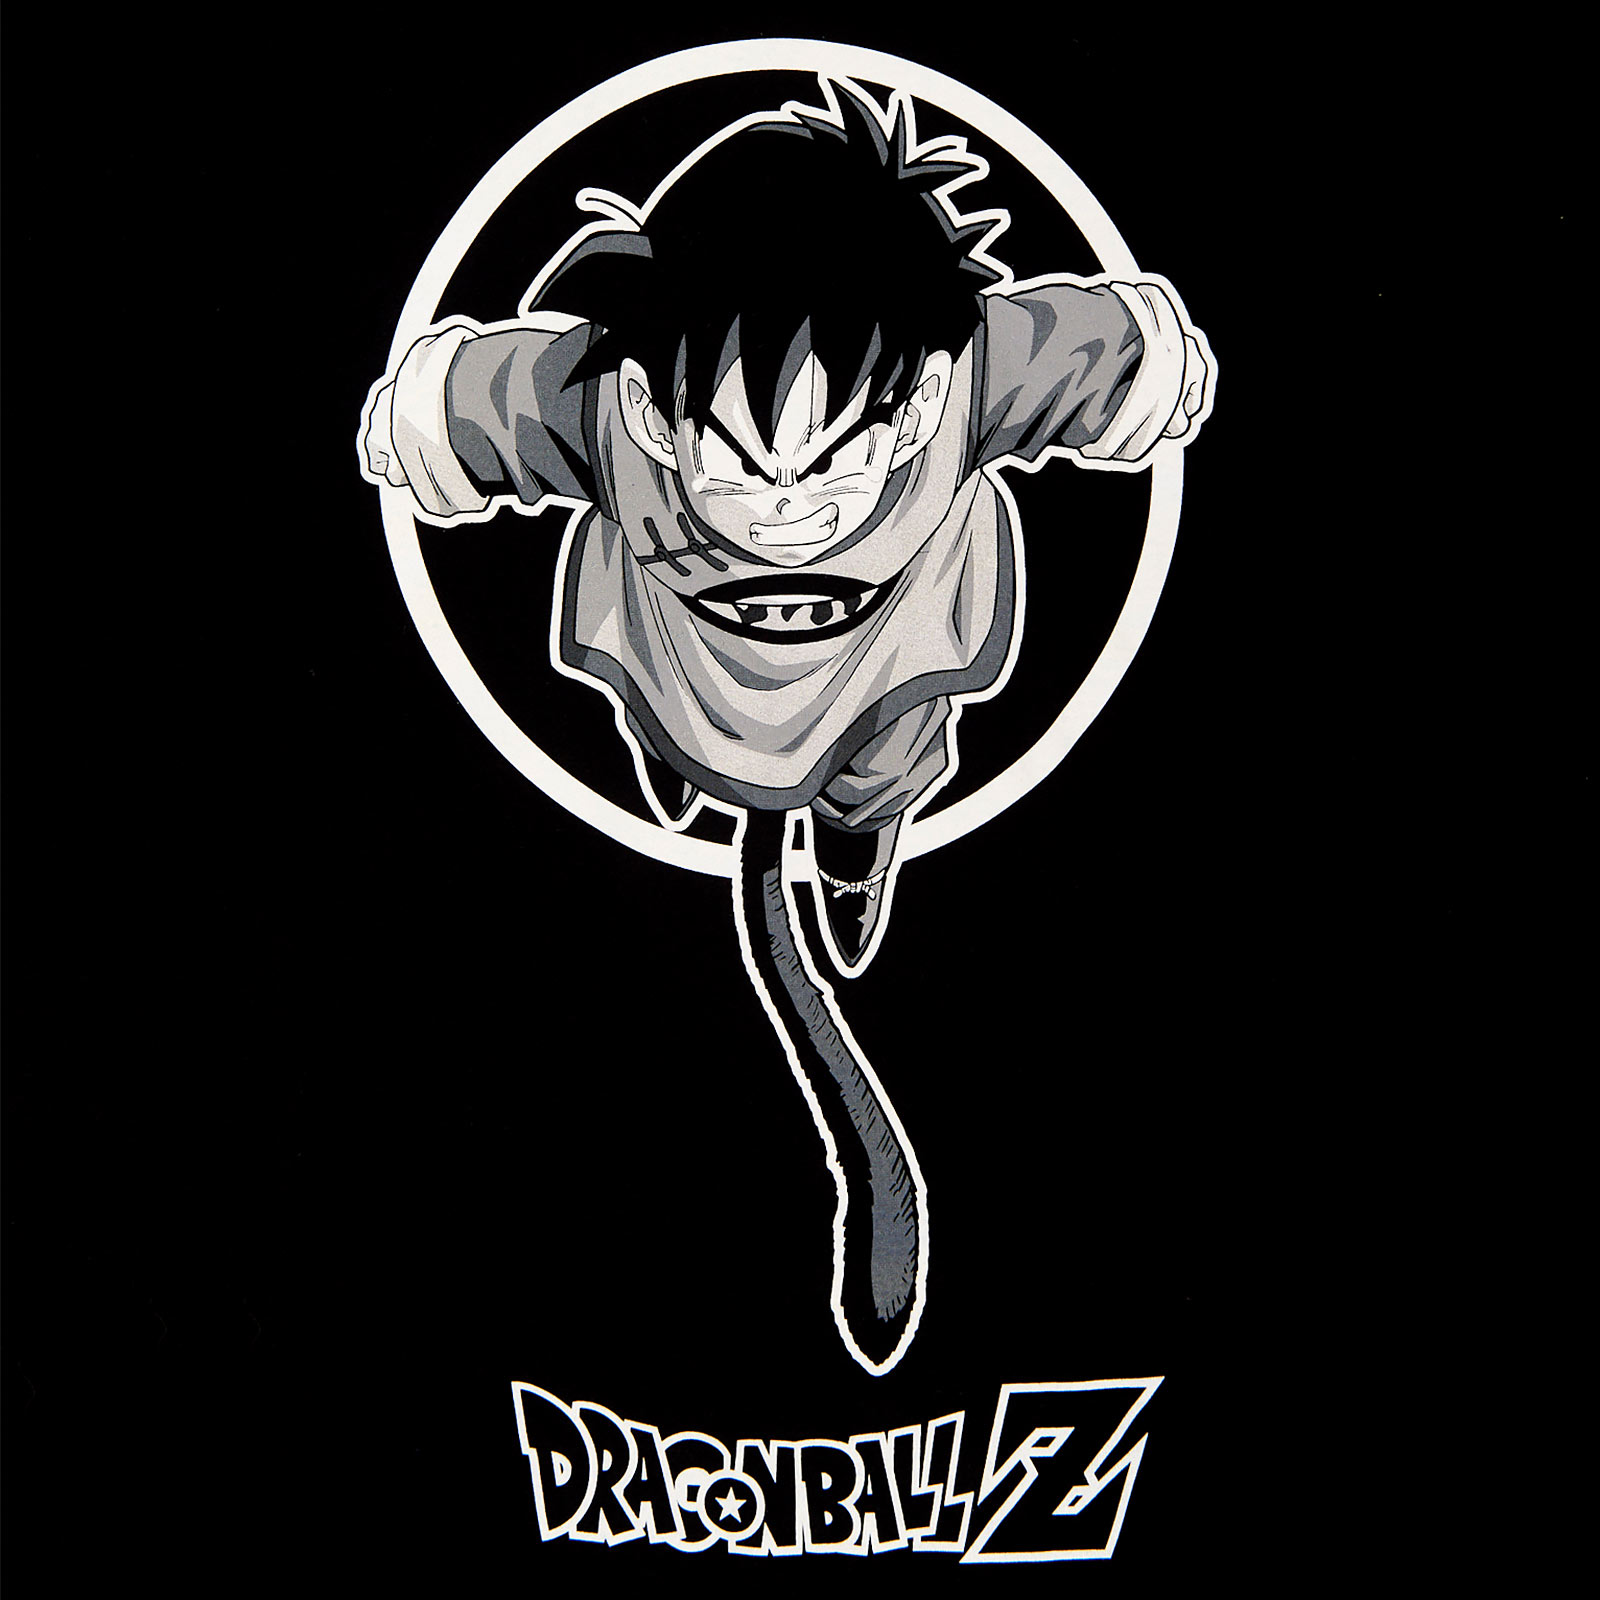 Dragon Ball Z - Gohan Jump T-Shirt Black